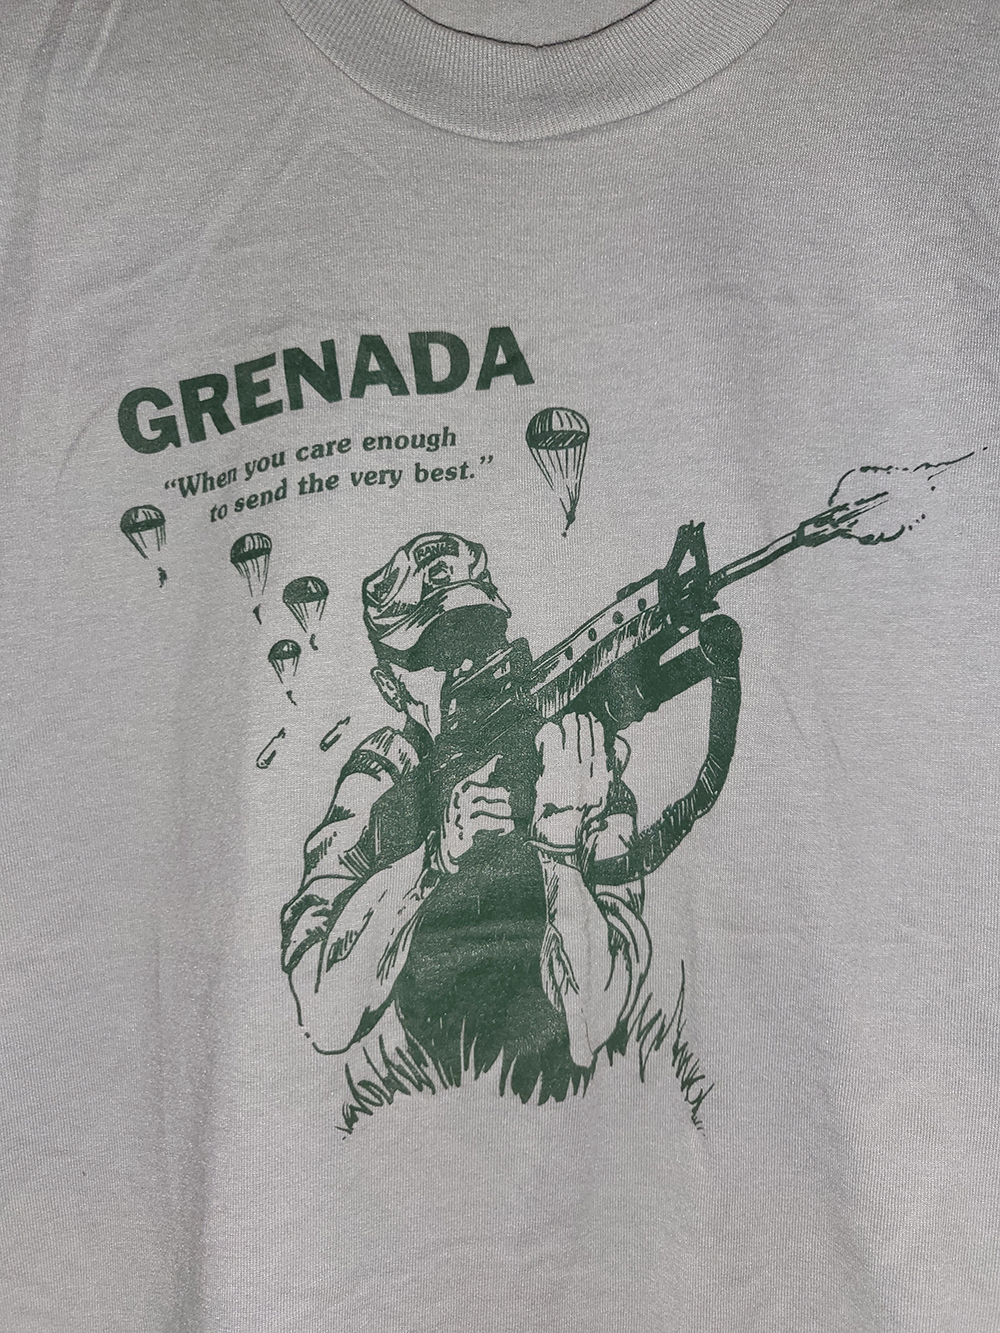 Vintage Grenada T-Shirt Send the best